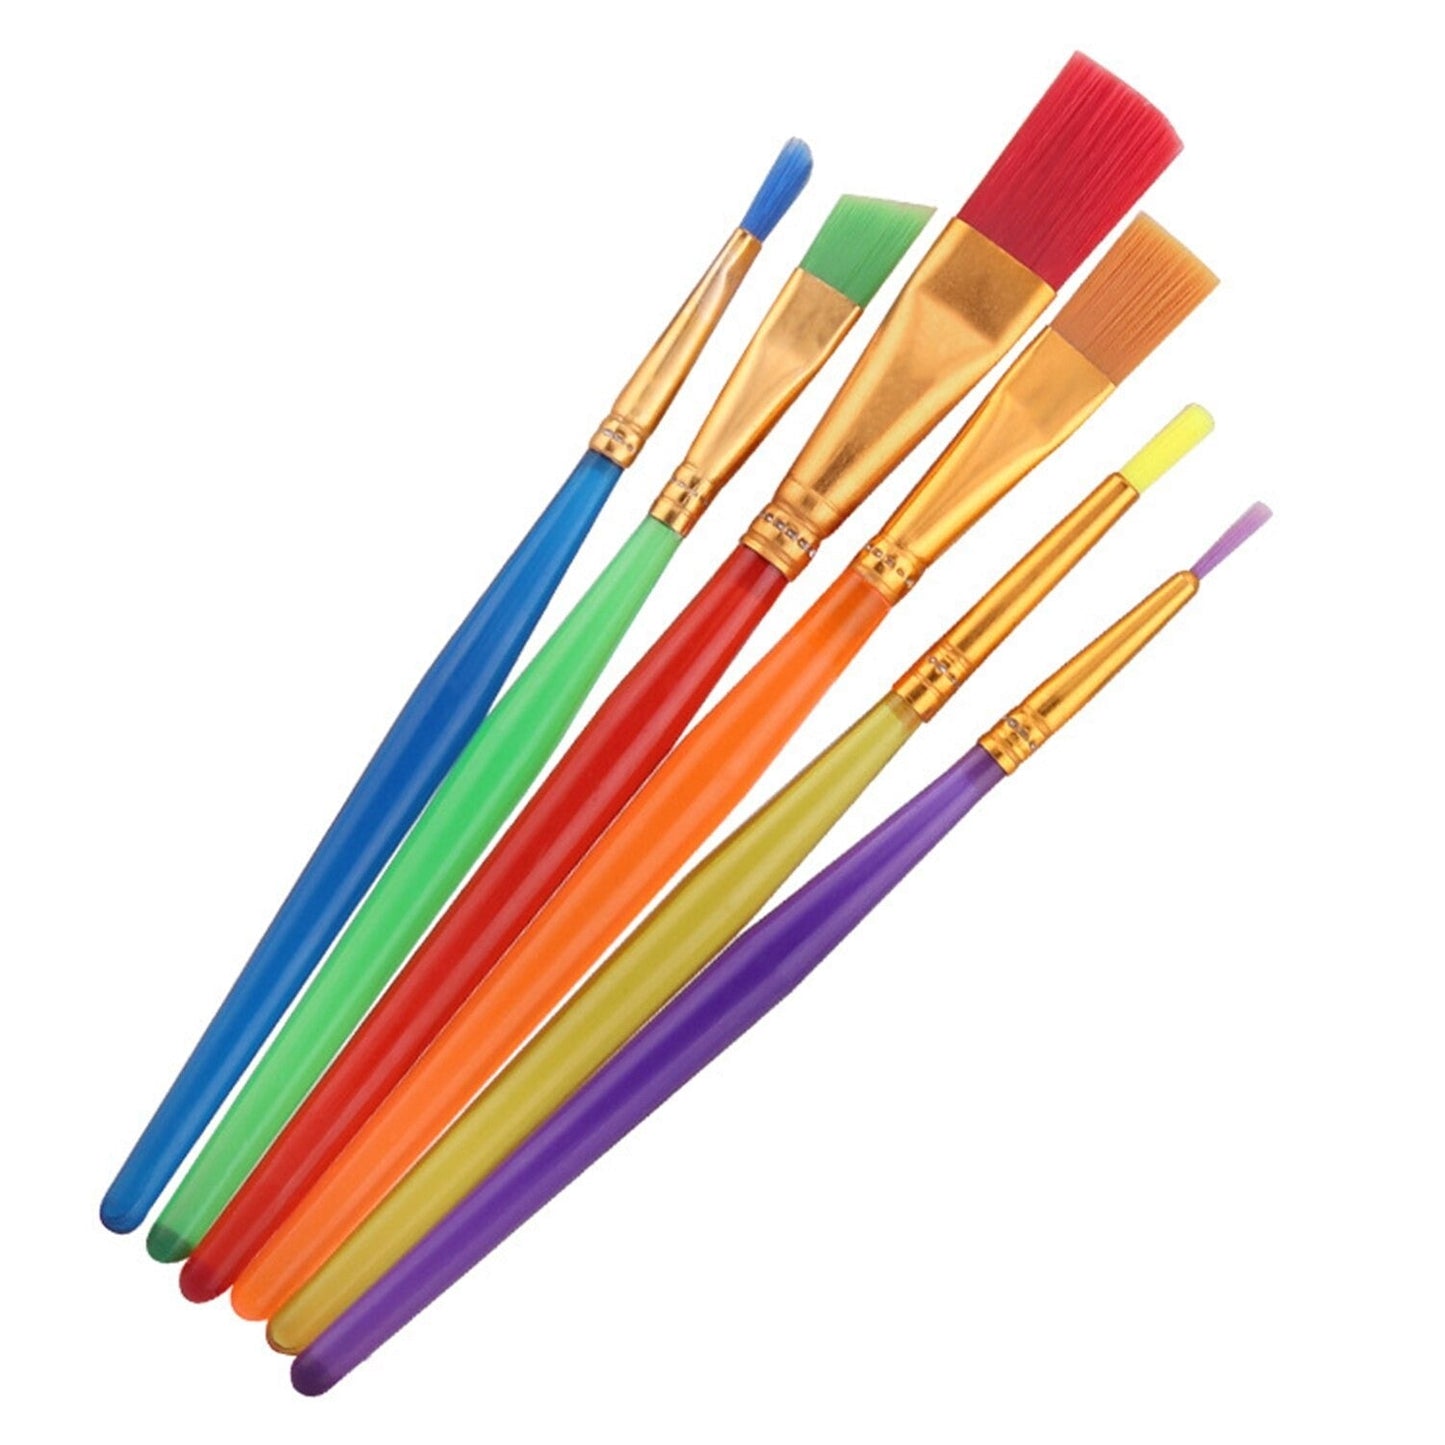 Artist Cake Paint Brushes 6Pcs Set Colorful